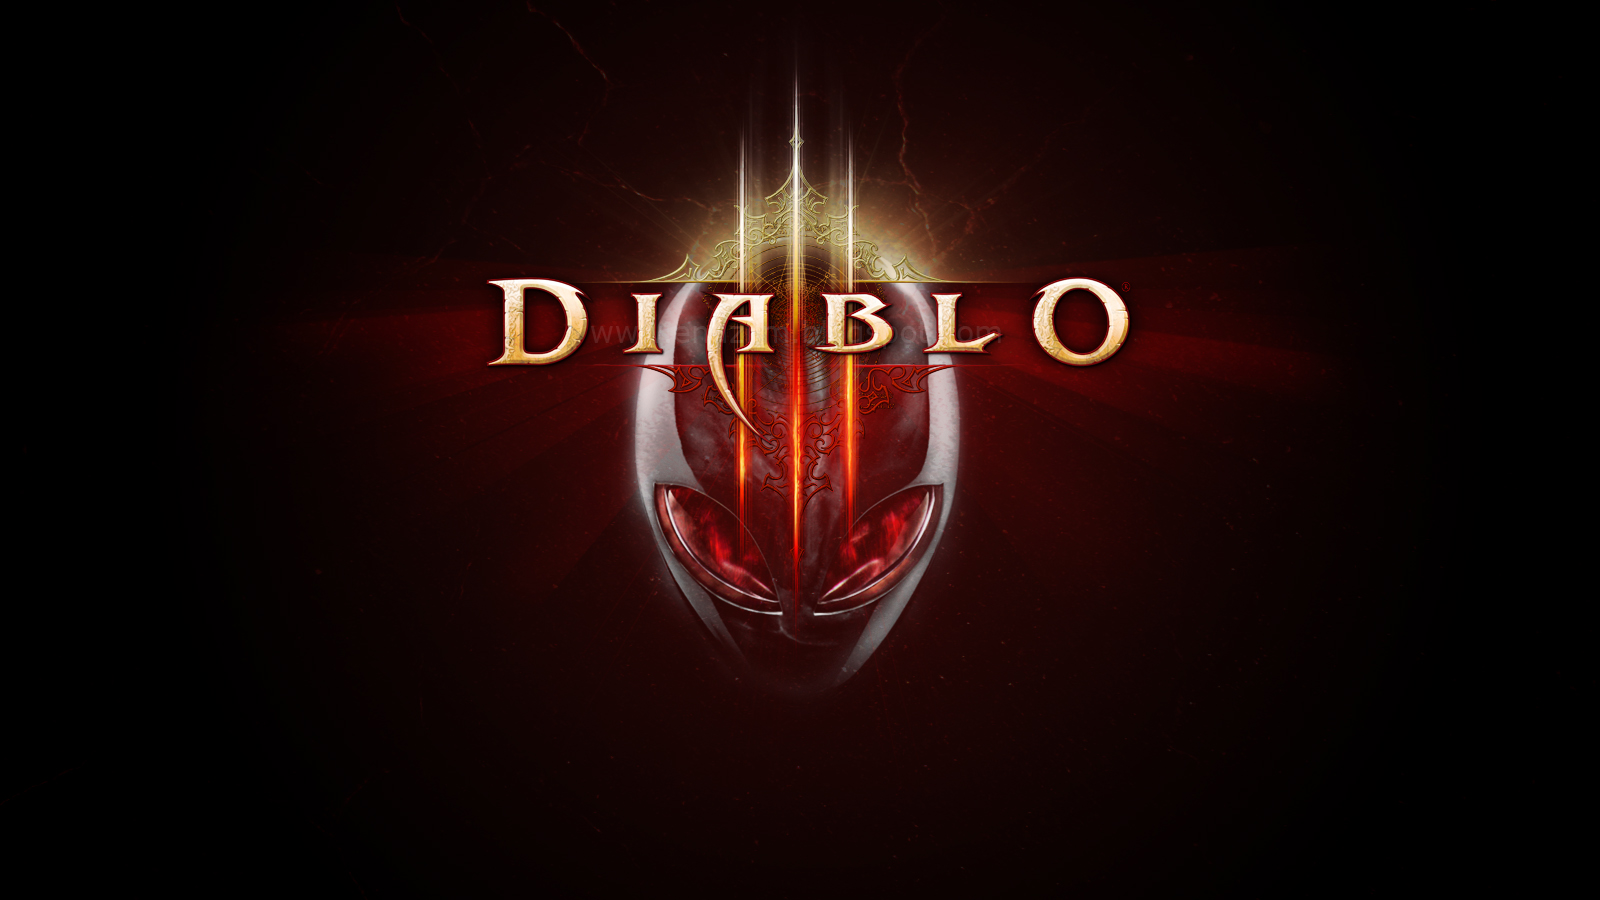 Diablo Alienware Wallpaper By Endzlim Dzlpwl Pixel Popular